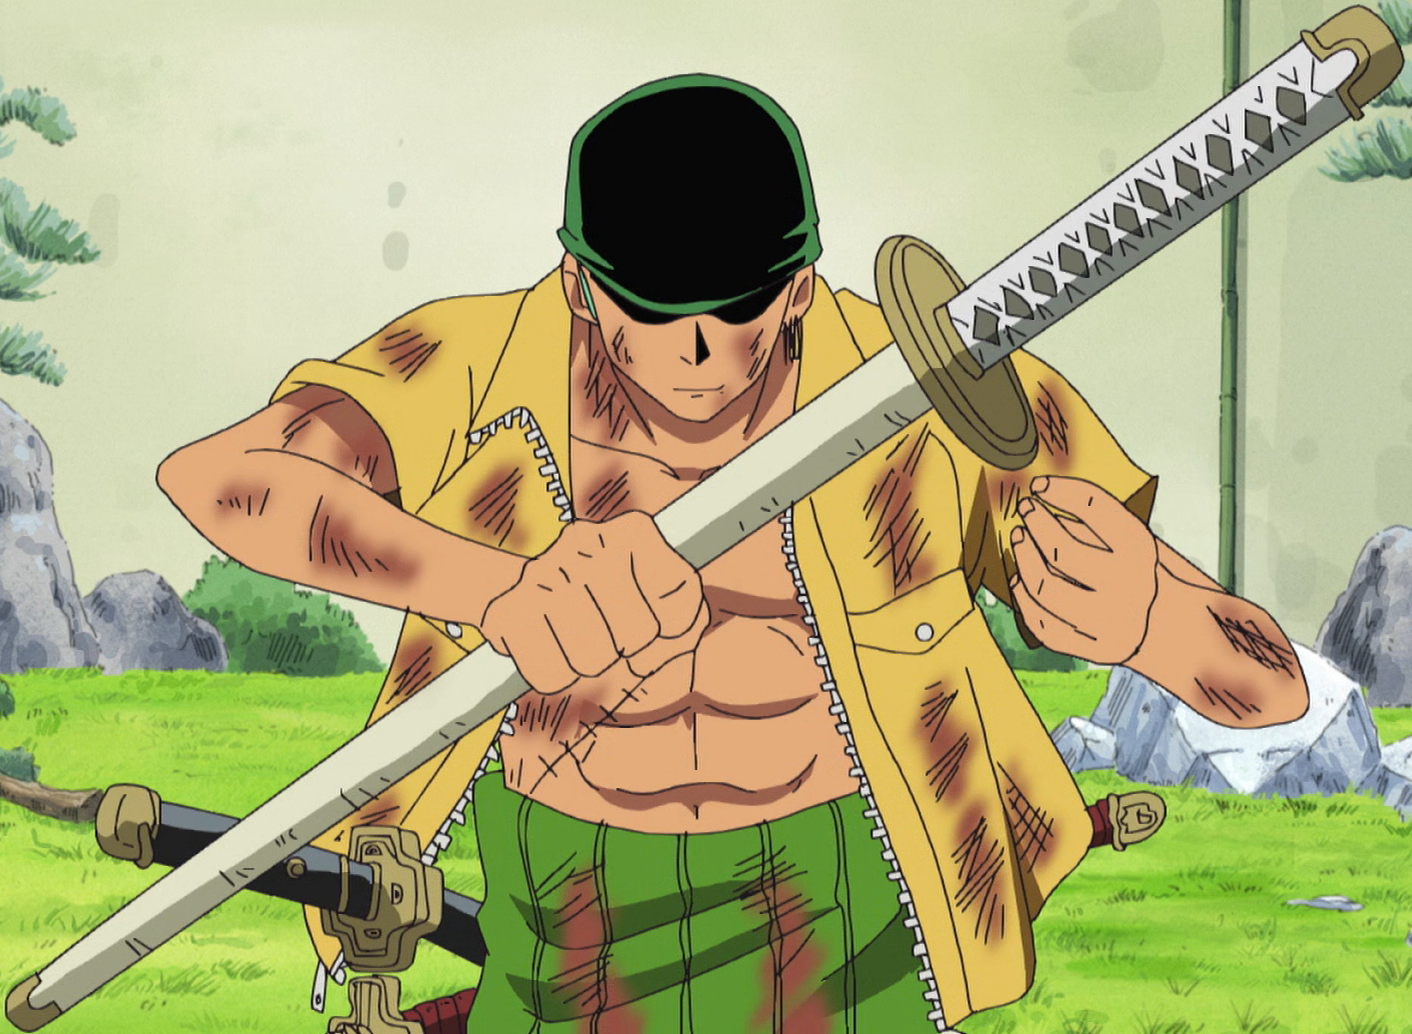 One Piece Sword Zoro Shusui, Wooden Swords Anime Zoro